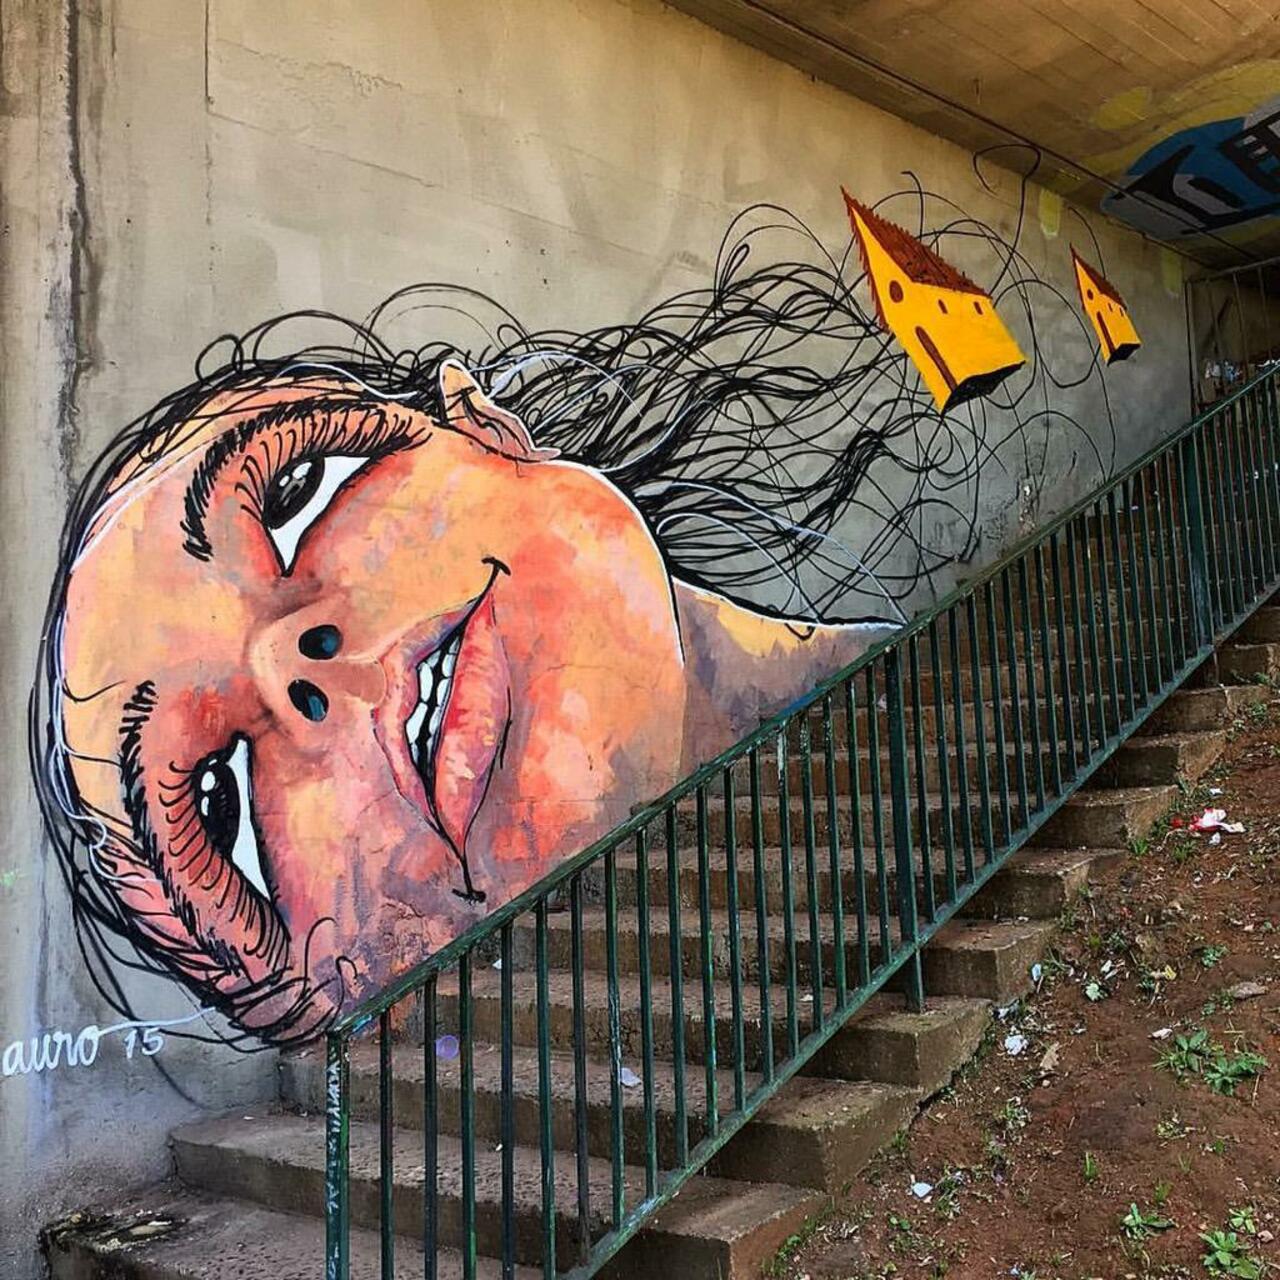 Street Art by Reveracidade in São Paulo 

#art #graffiti #mural #streetart http://t.co/WFTyJvyz0h